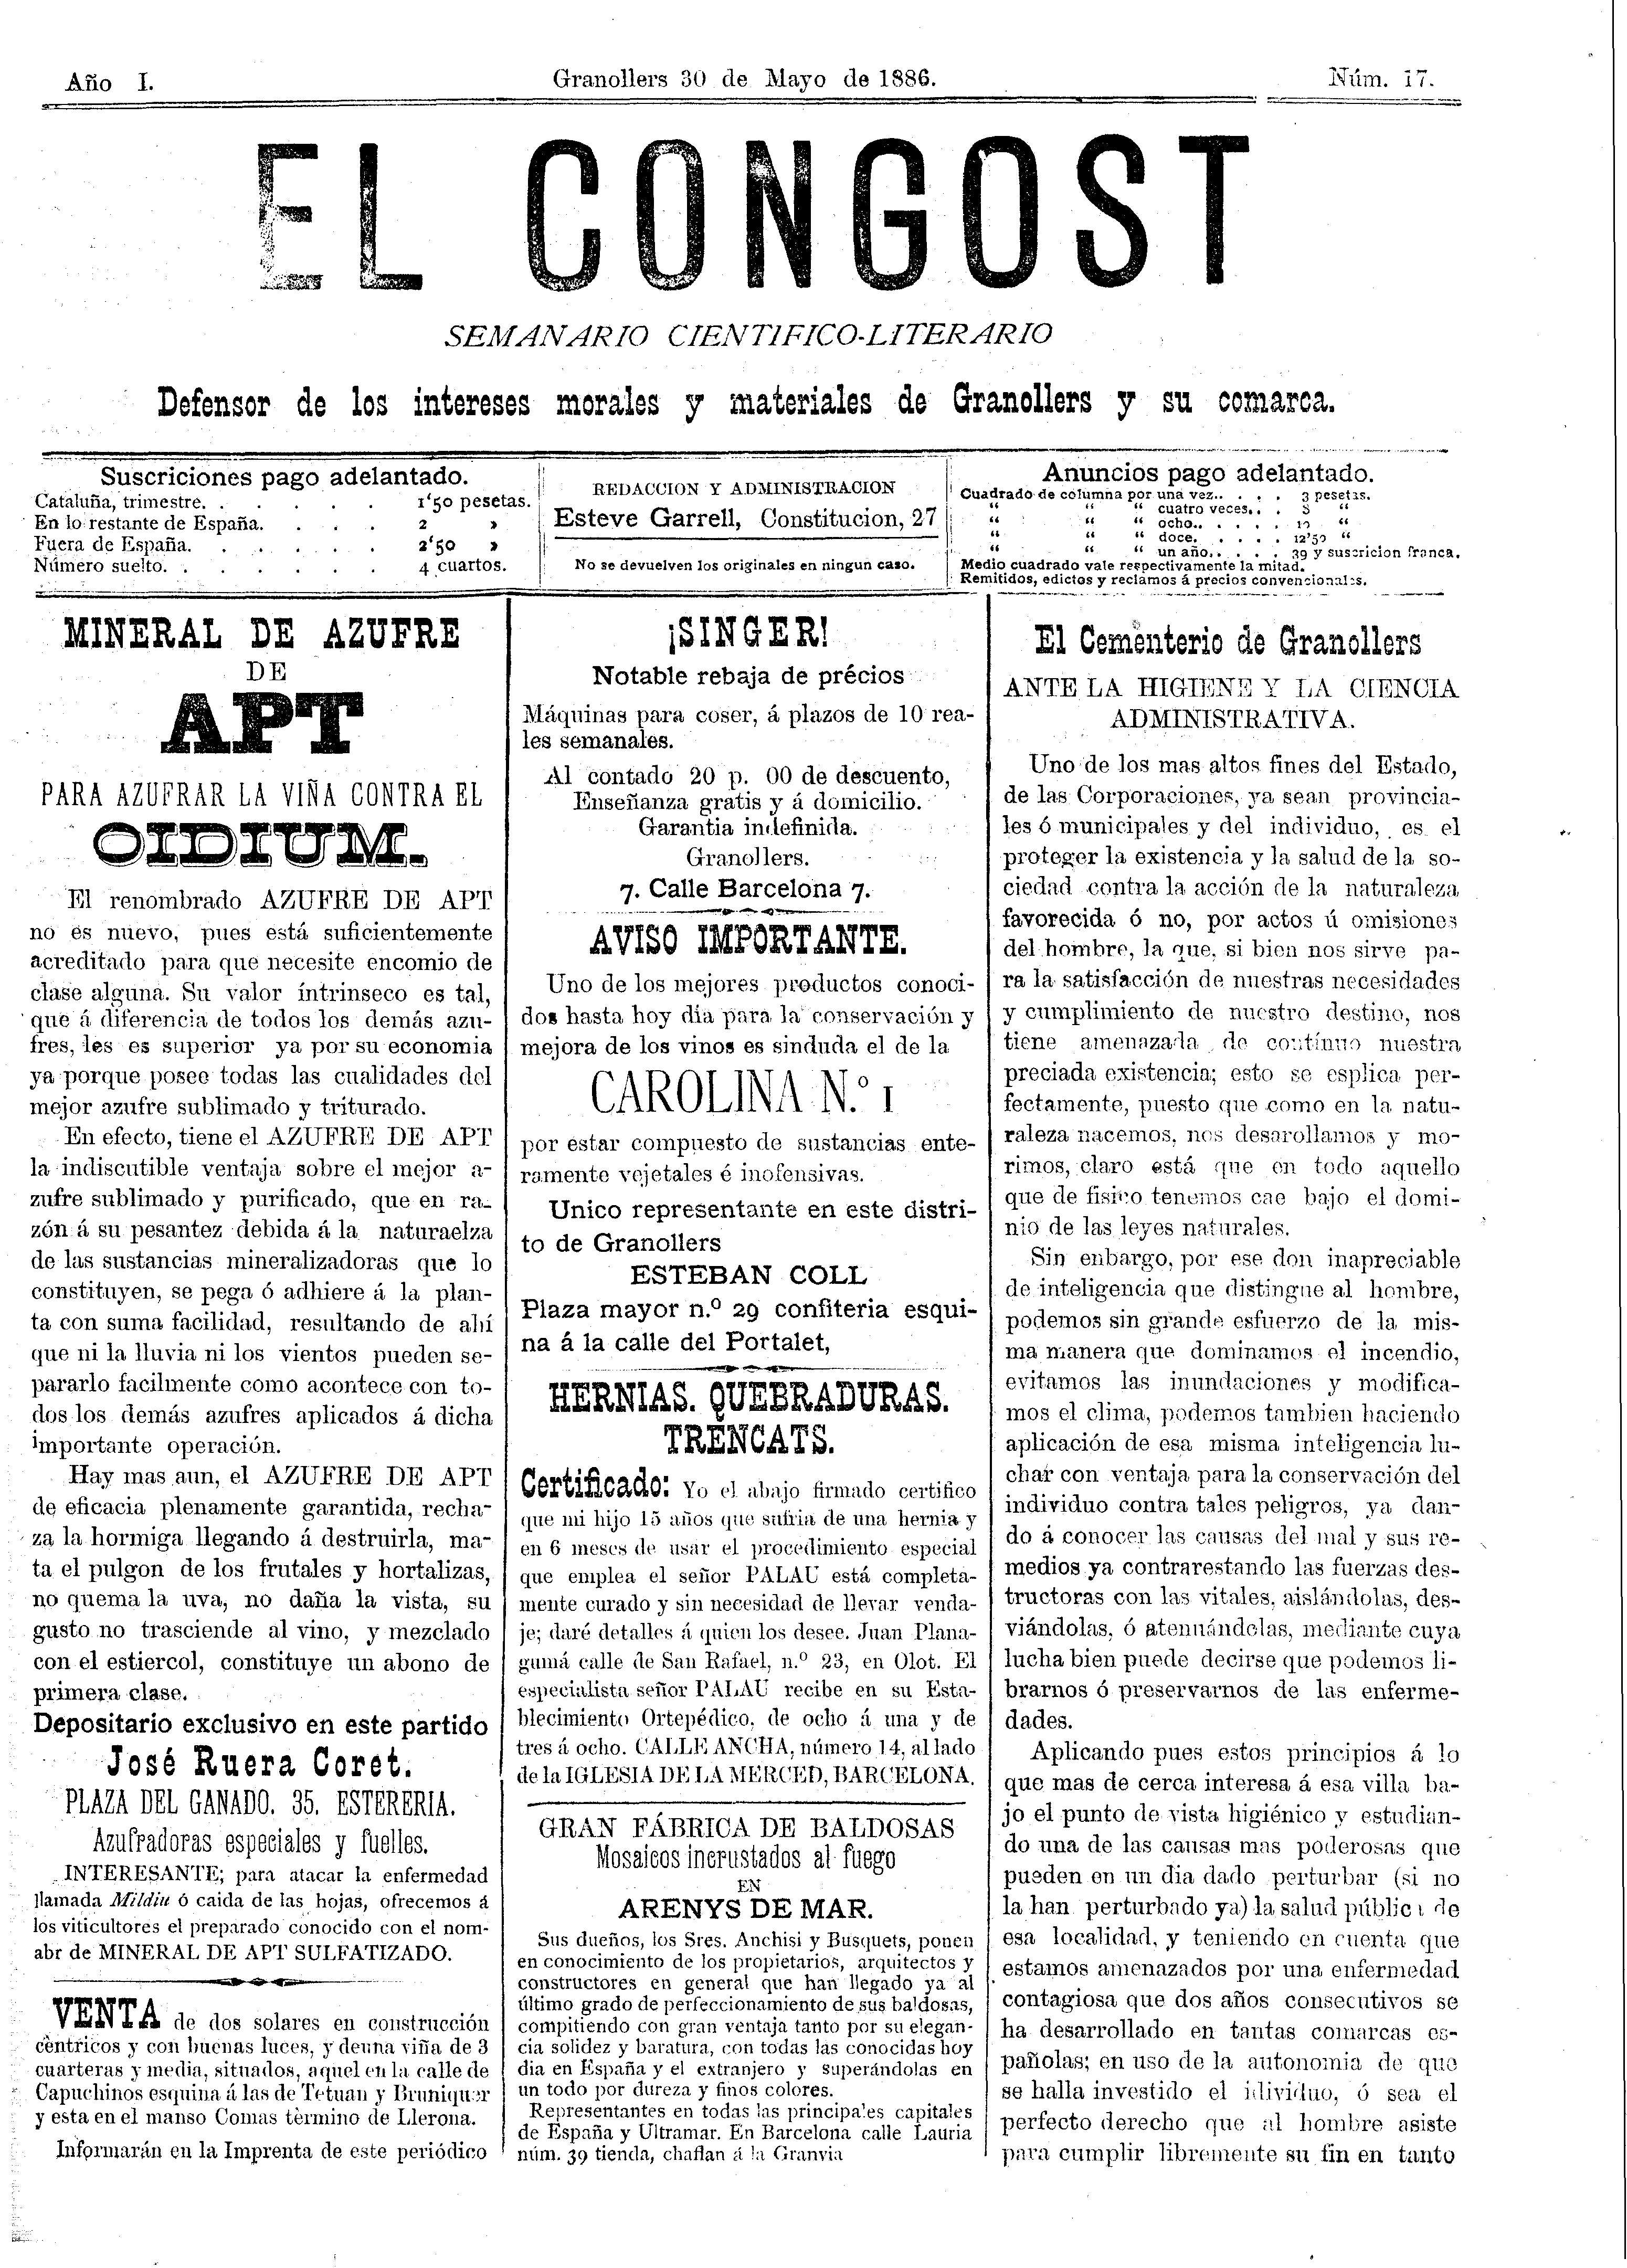 El Congost, 30/5/1886 [Ejemplar]